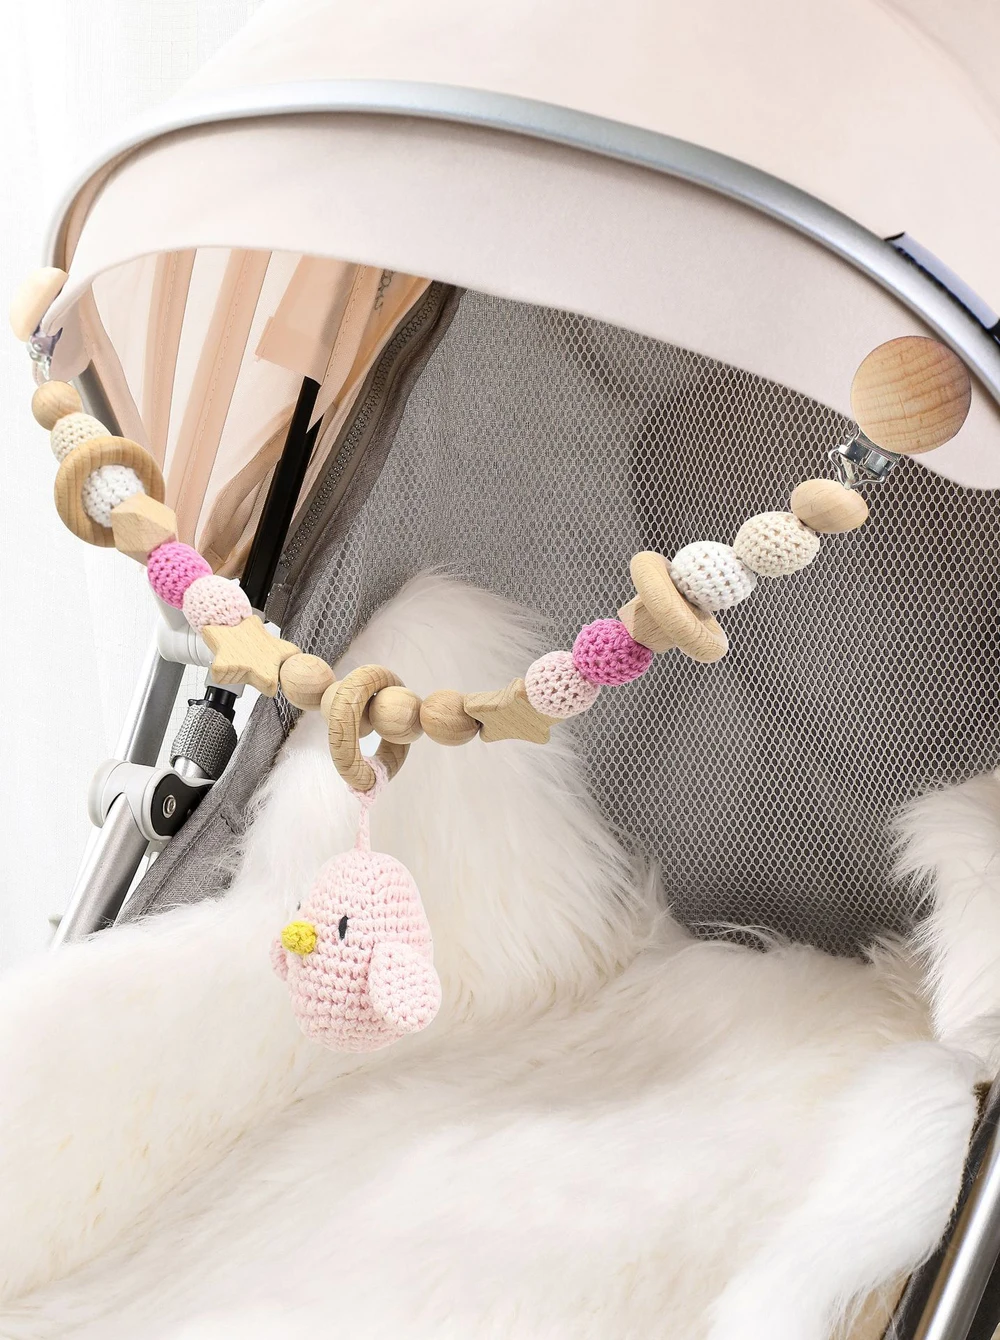 New Teething Toy Beech Wooden Crochet Baby Teether Bracelet Wood Bunny Pacifier Holder Stroller Pram Chain Decoration